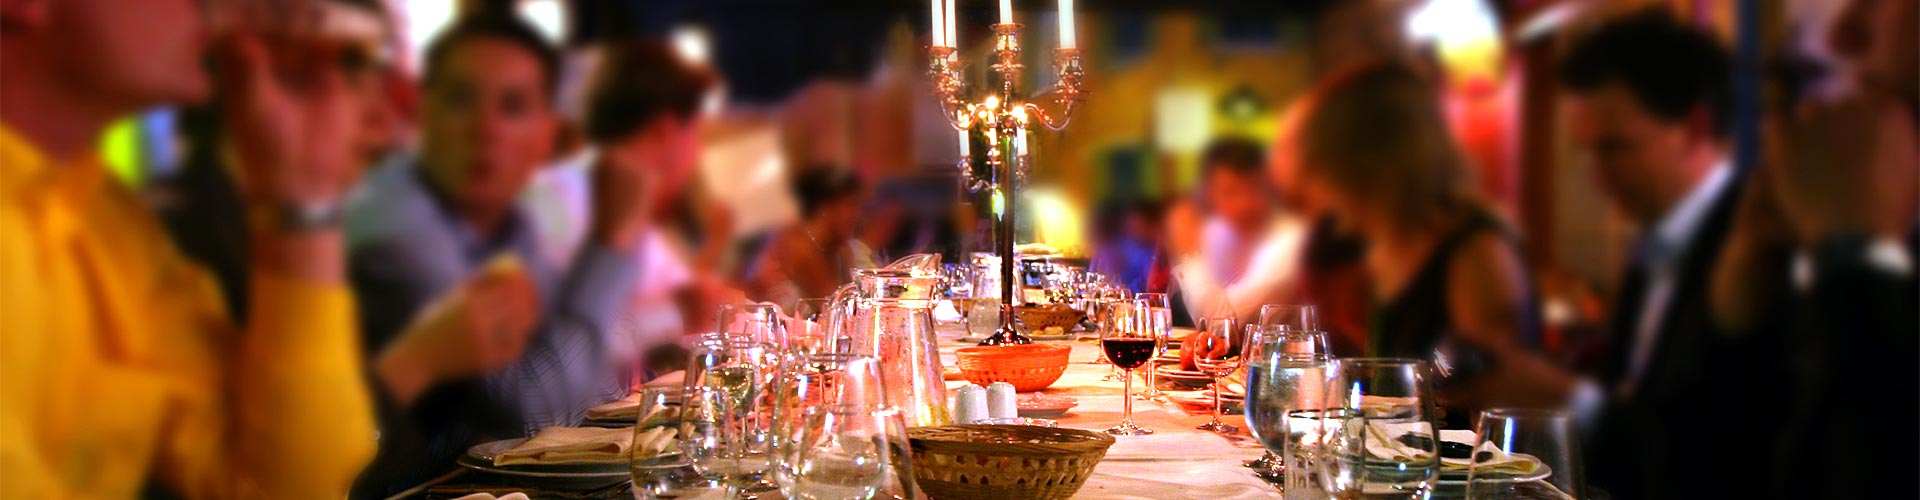 Restaurantes para grupos en Premià de Mar